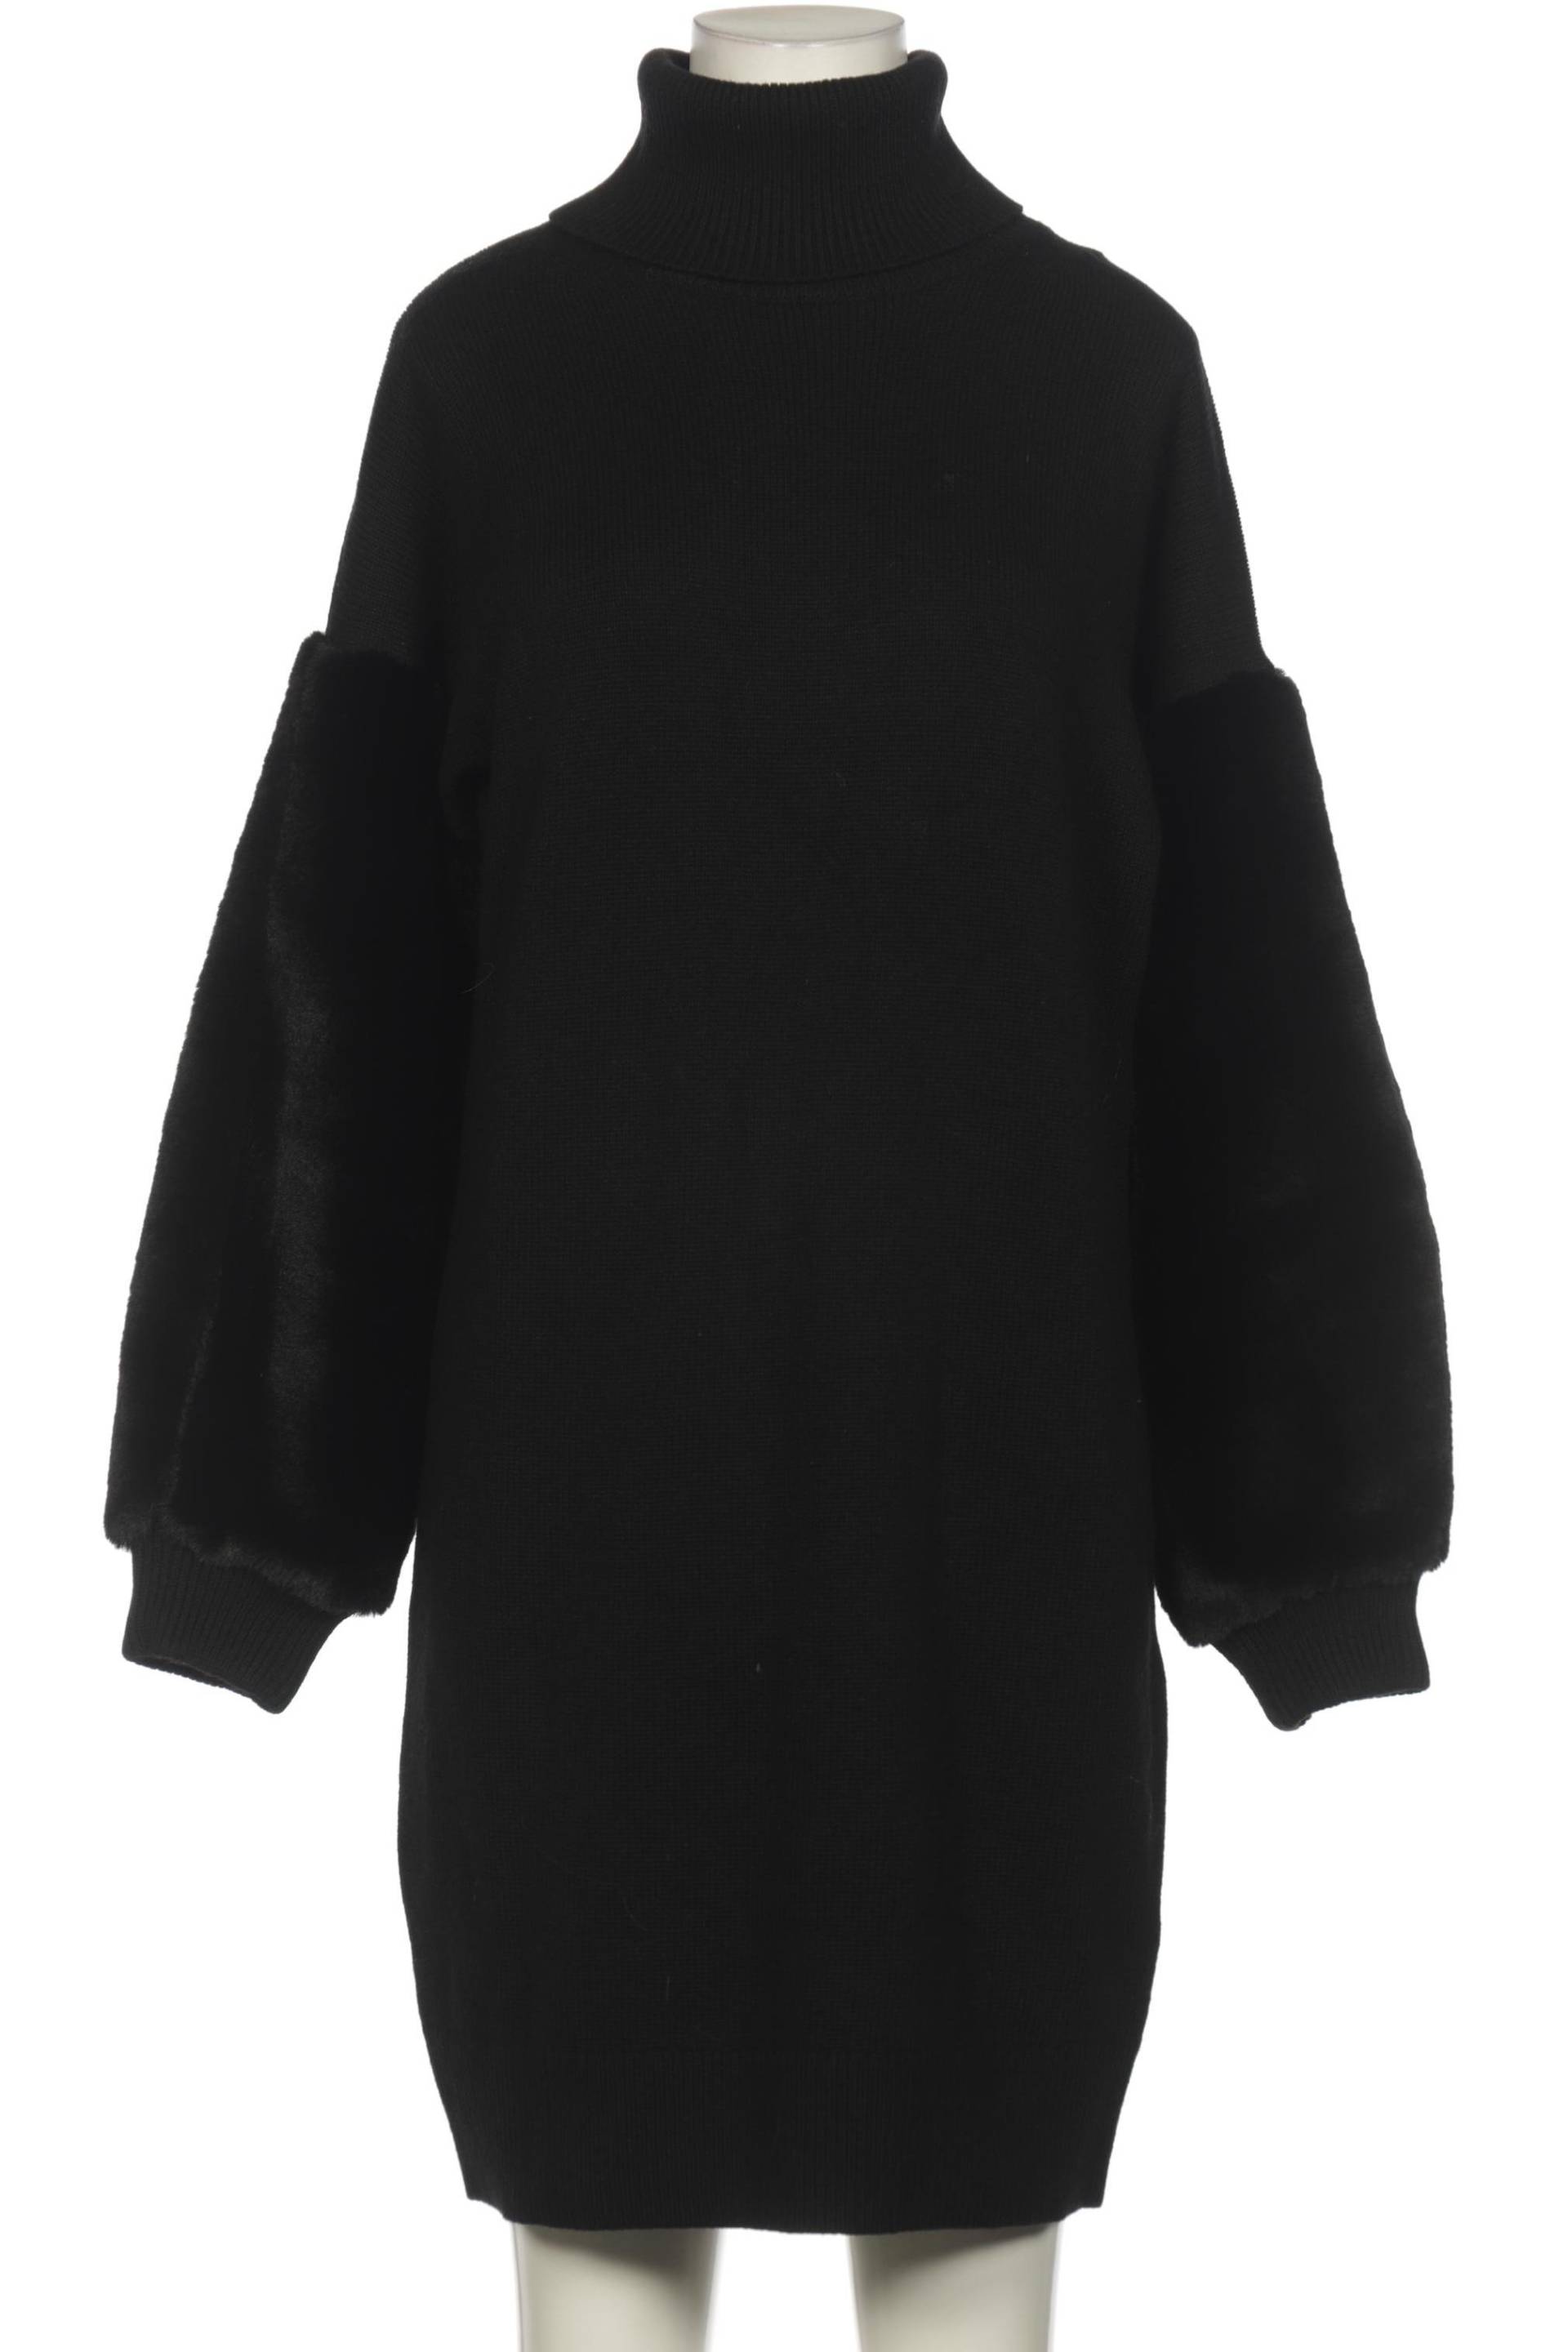 MICHAEL MICHAEL KORS Damen Kleid, schwarz von MICHAEL Michael Kors